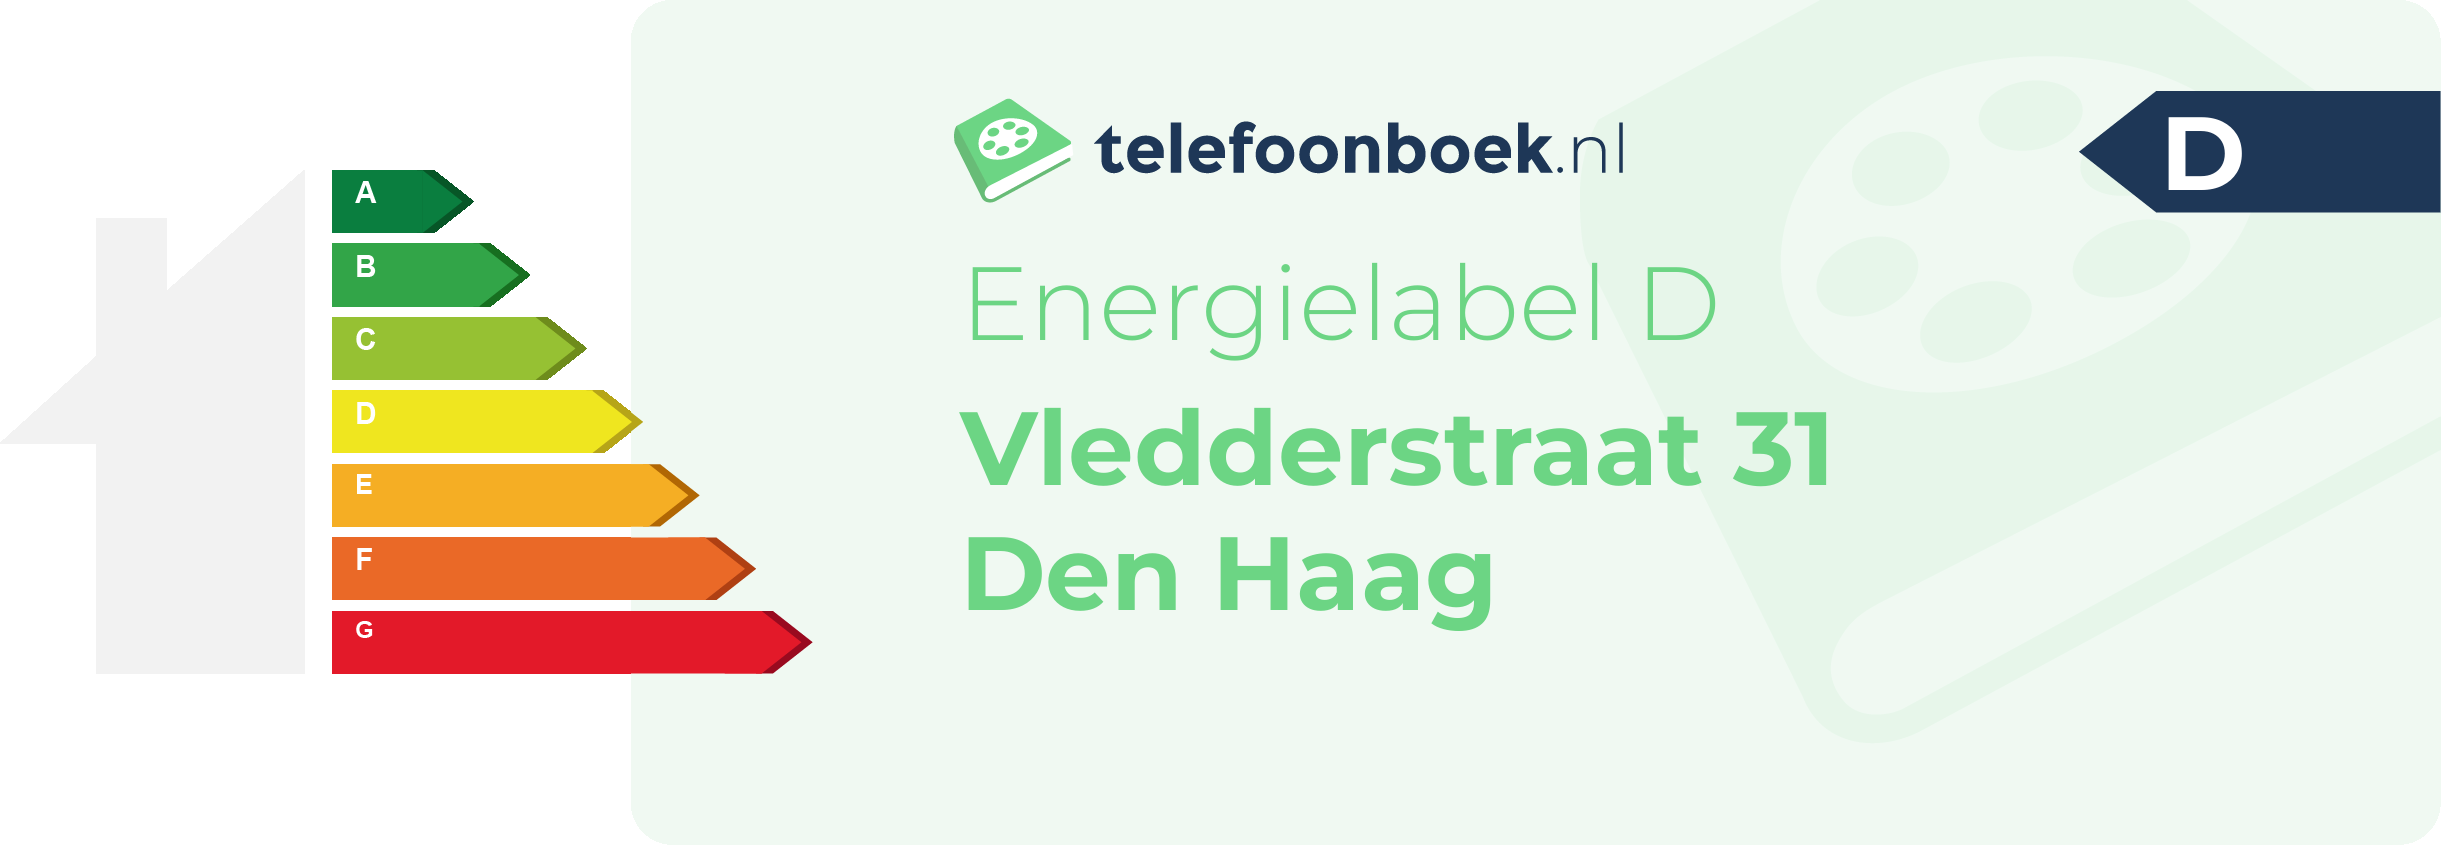 Energielabel Vledderstraat 31 Den Haag